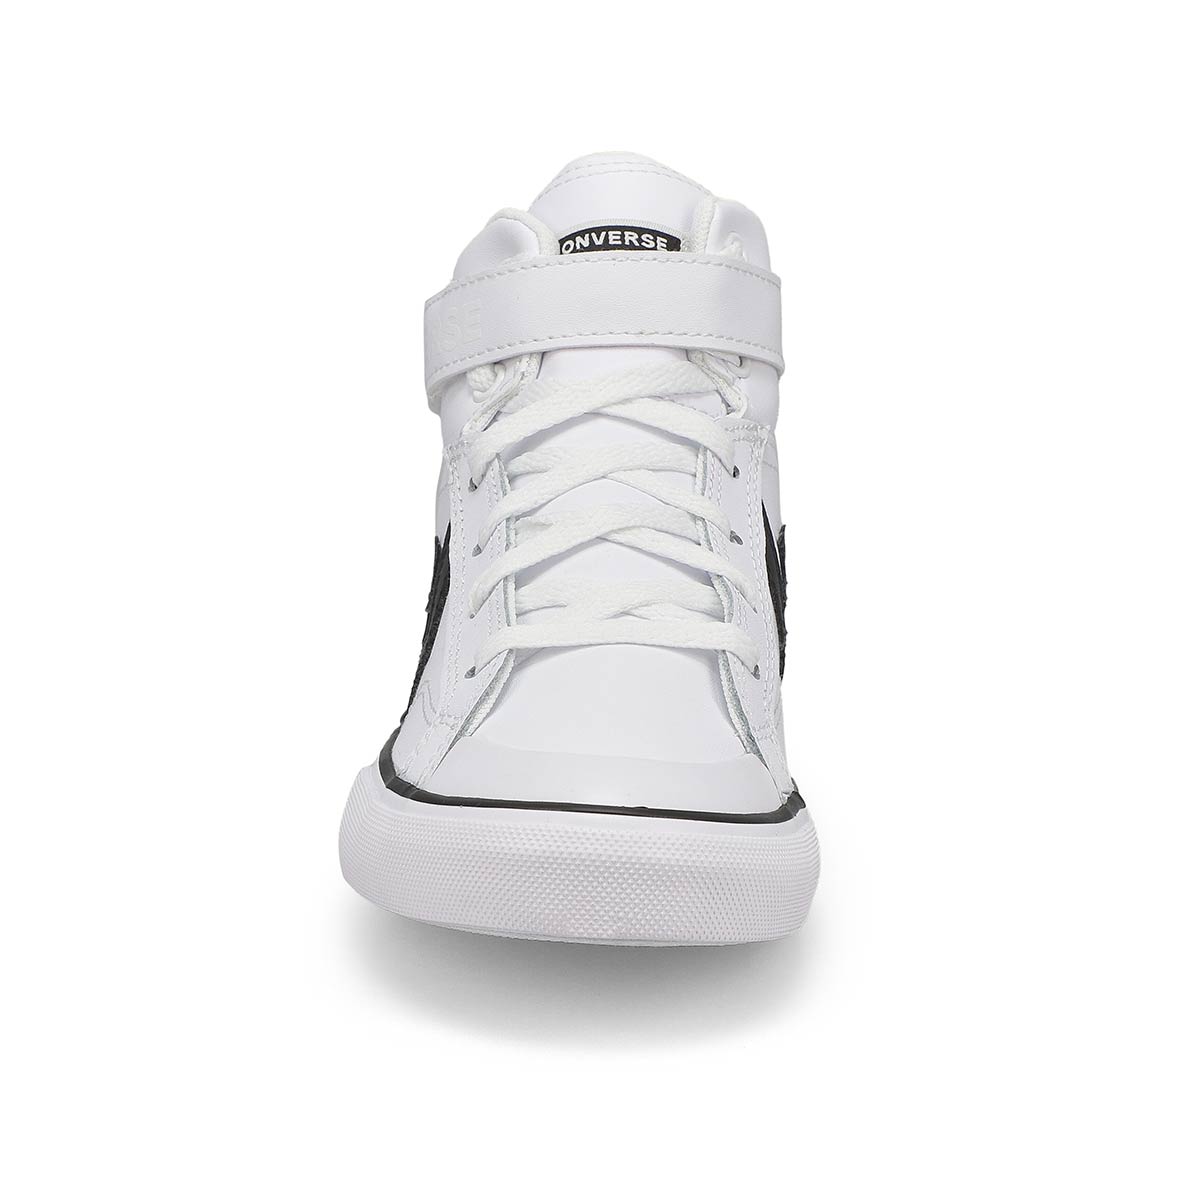 Boy's Chuck Taylor All Star Pro Blaze Strap Leather Sneaker - White/Black